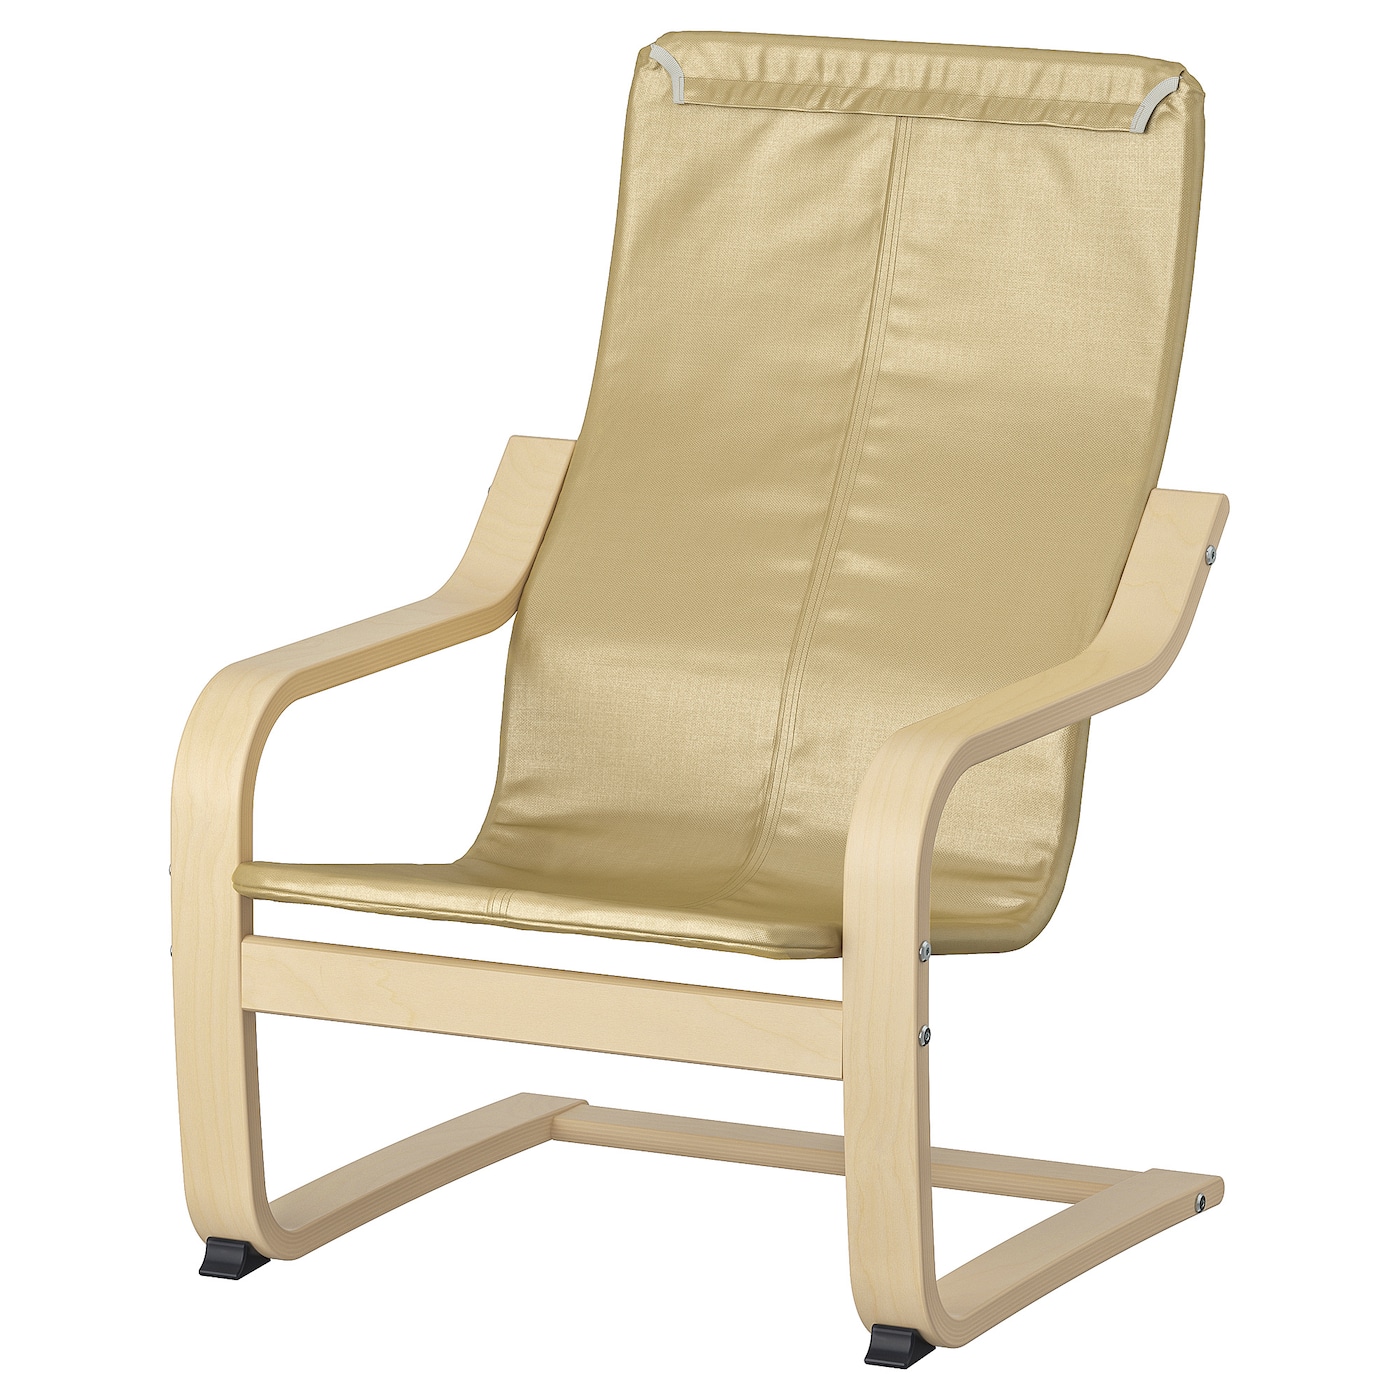 Каркас детского кресла - POÄNG /POANG IKEA/ ПОЭНГ ИКЕА, 68х47 см, бежевый